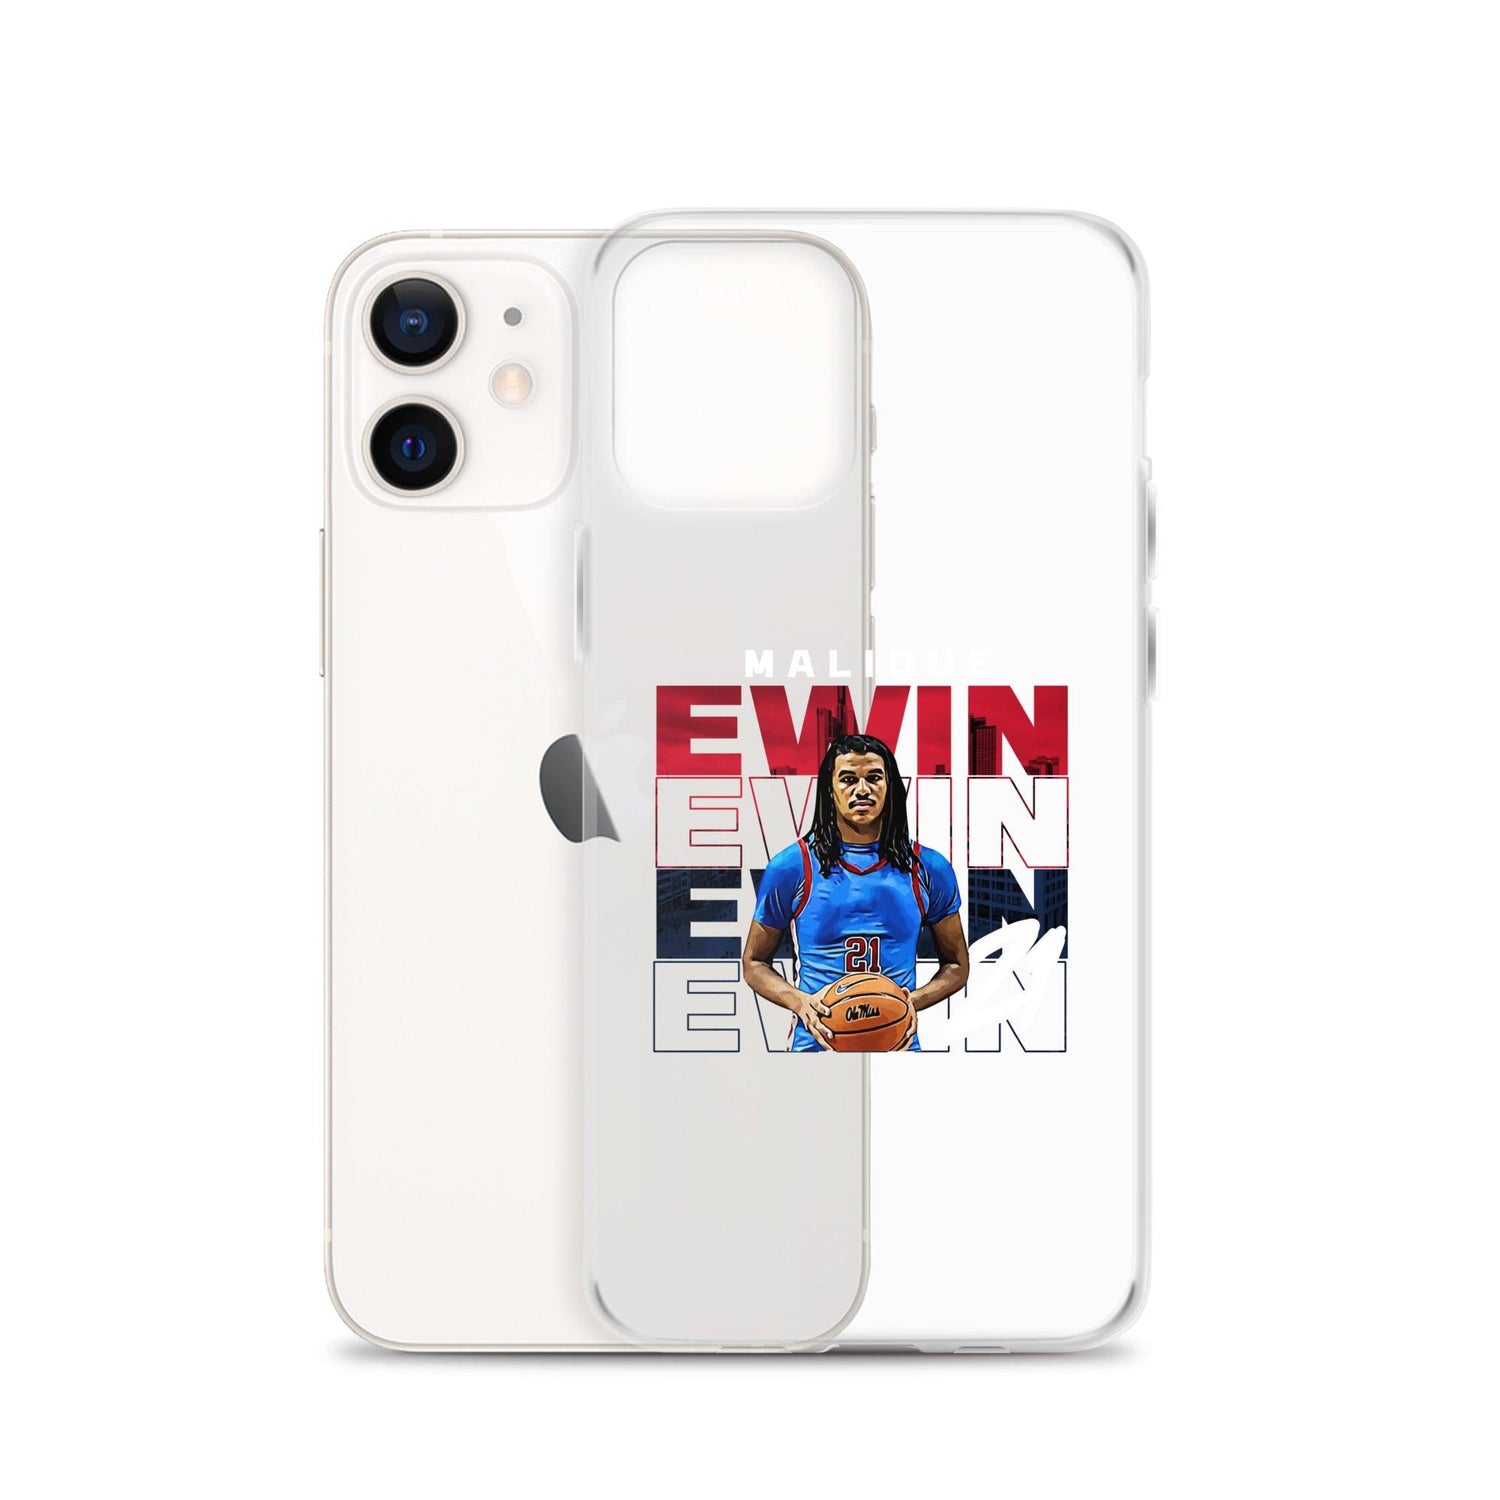 Malique Ewin "Gameday" iPhone® - Fan Arch